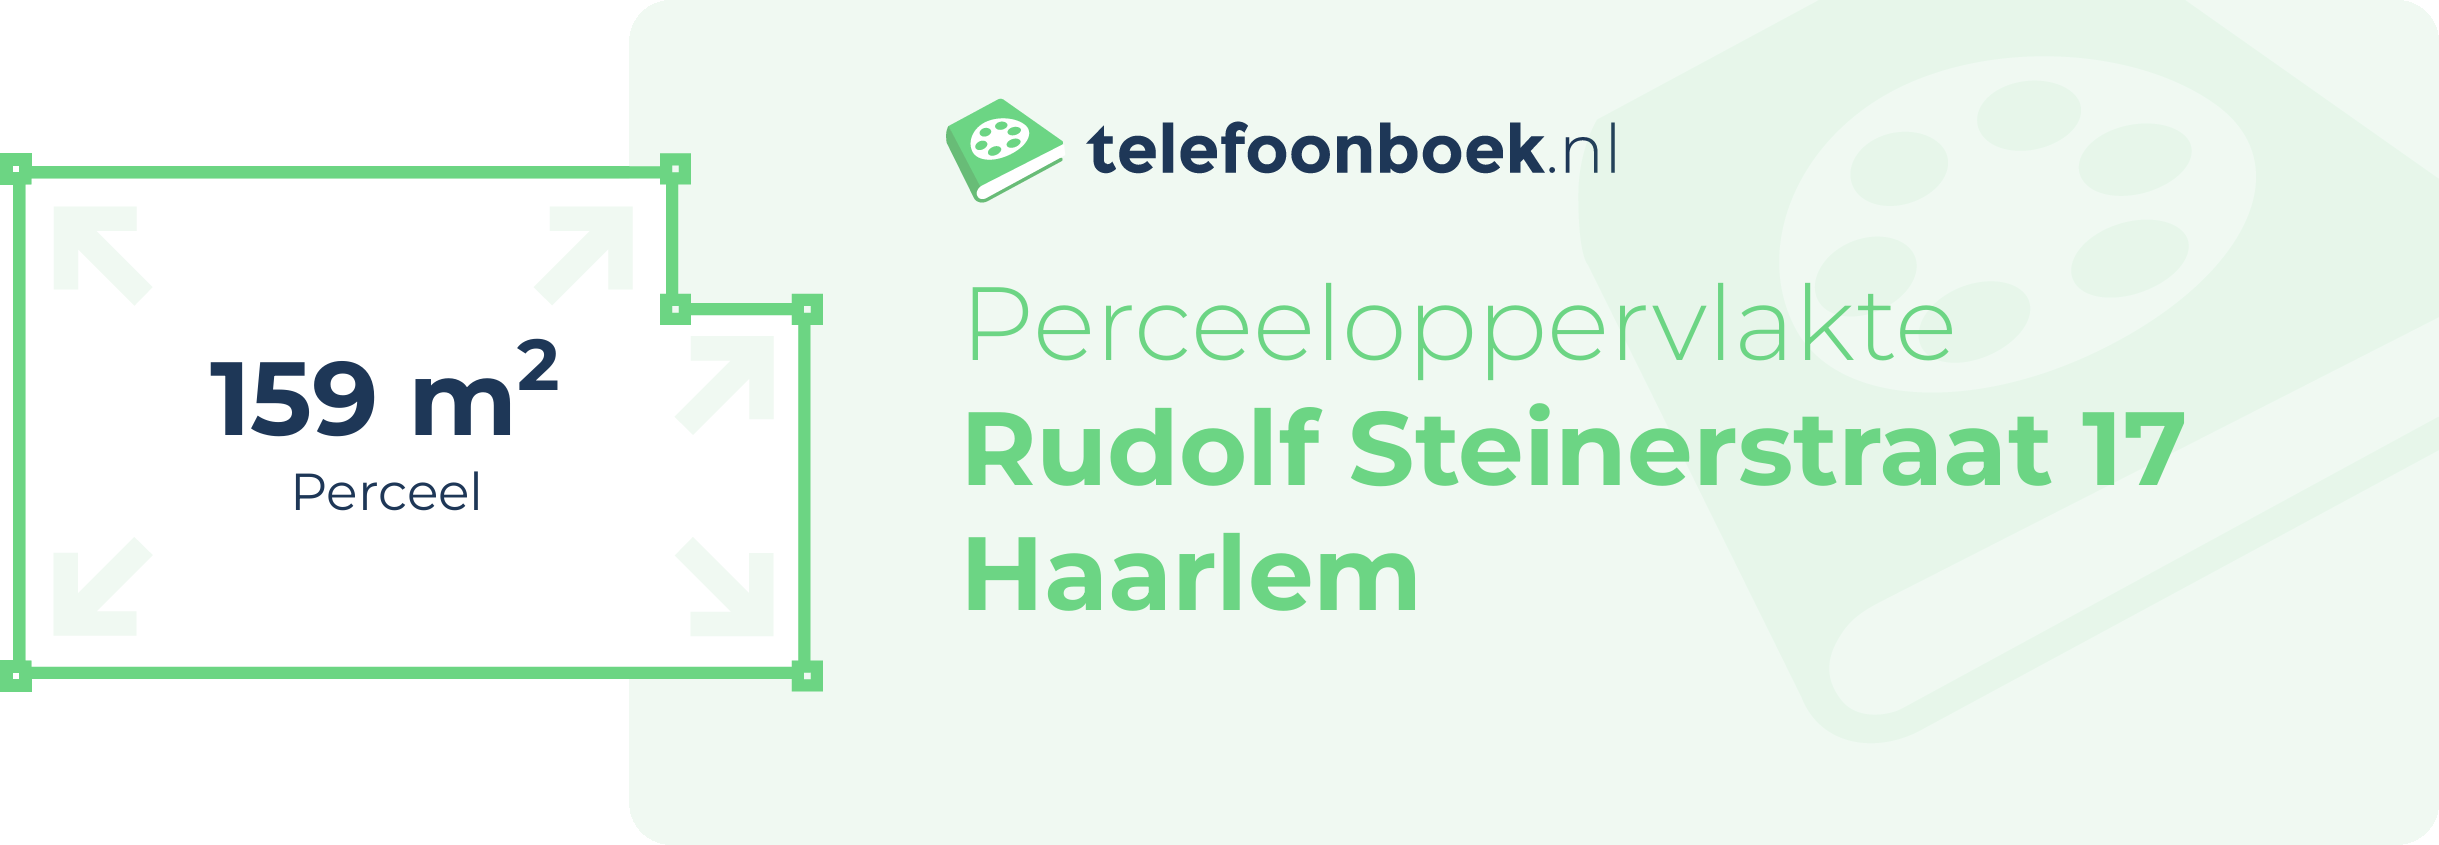 Perceeloppervlakte Rudolf Steinerstraat 17 Haarlem